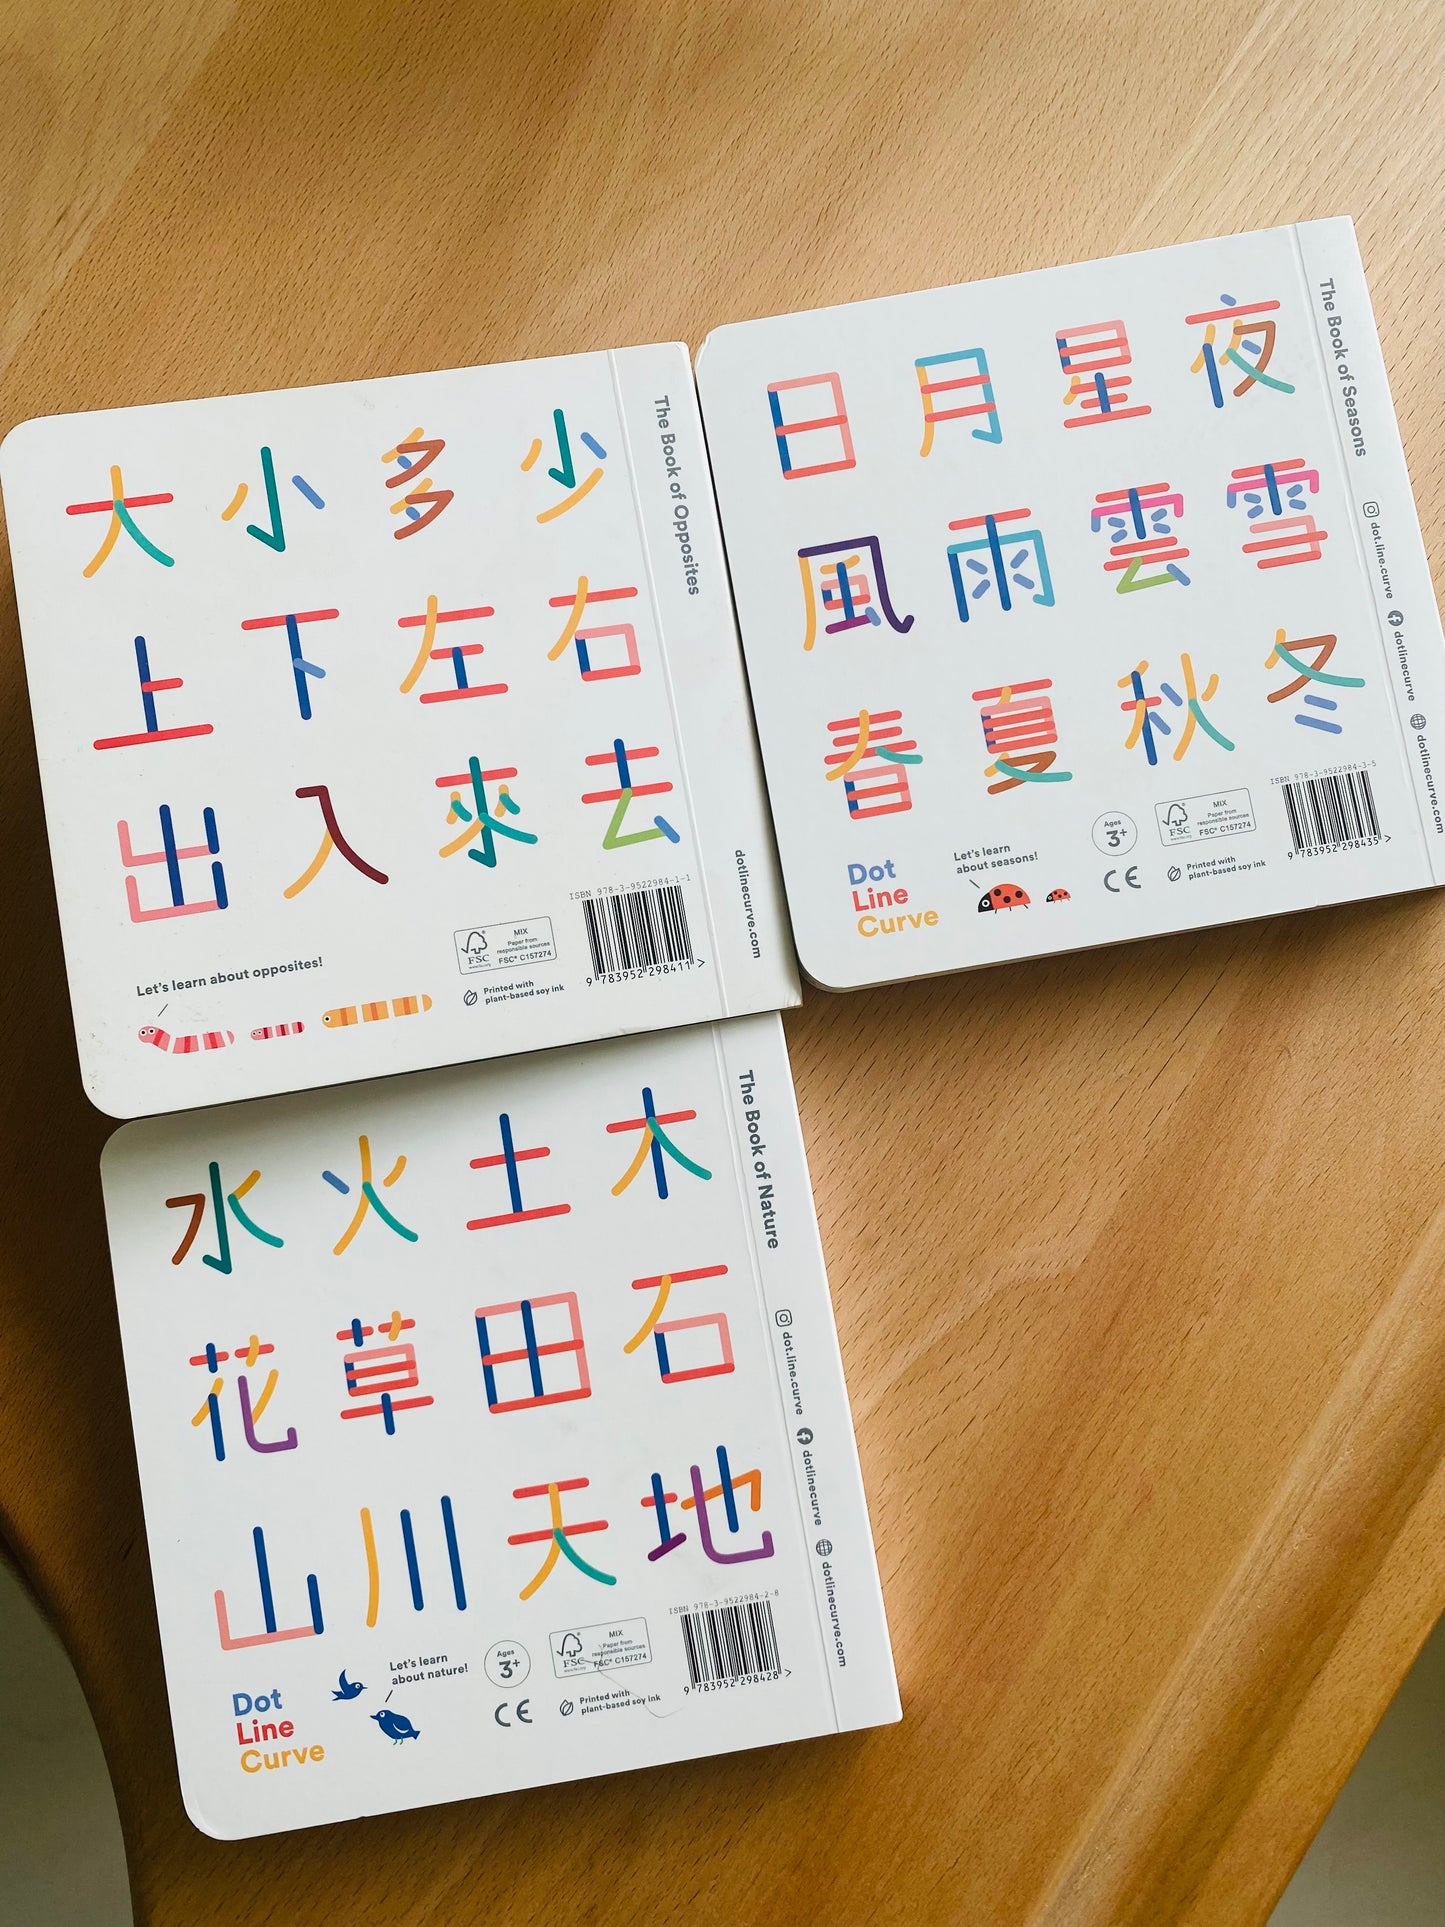 The Dot Line Curve Collection (Bundle of All Writing Sets + Count & Match Puzzle) 觸感中文寫字組合及中國數字硬頁配對拼圖